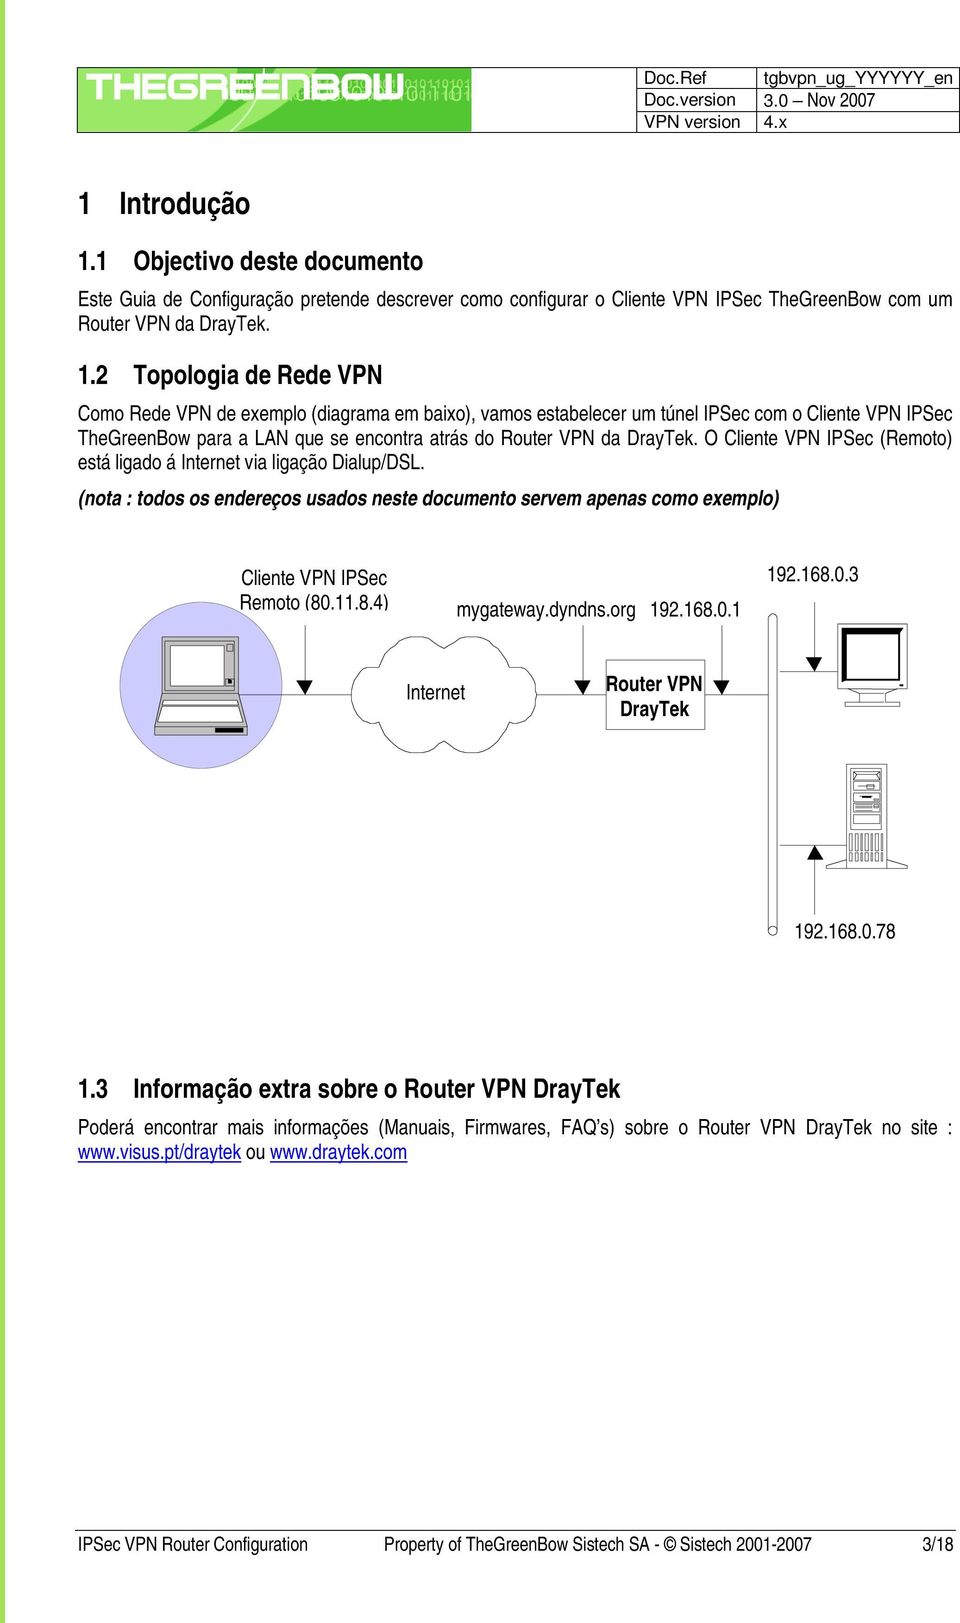 2 Topologia de Rede VPN Como Rede VPN de exemplo (diagrama em baixo), vamos estabelecer um túnel IPSec com o Cliente VPN IPSec TheGreenBow para a LAN que se encontra atrás do Router VPN da DrayTek.